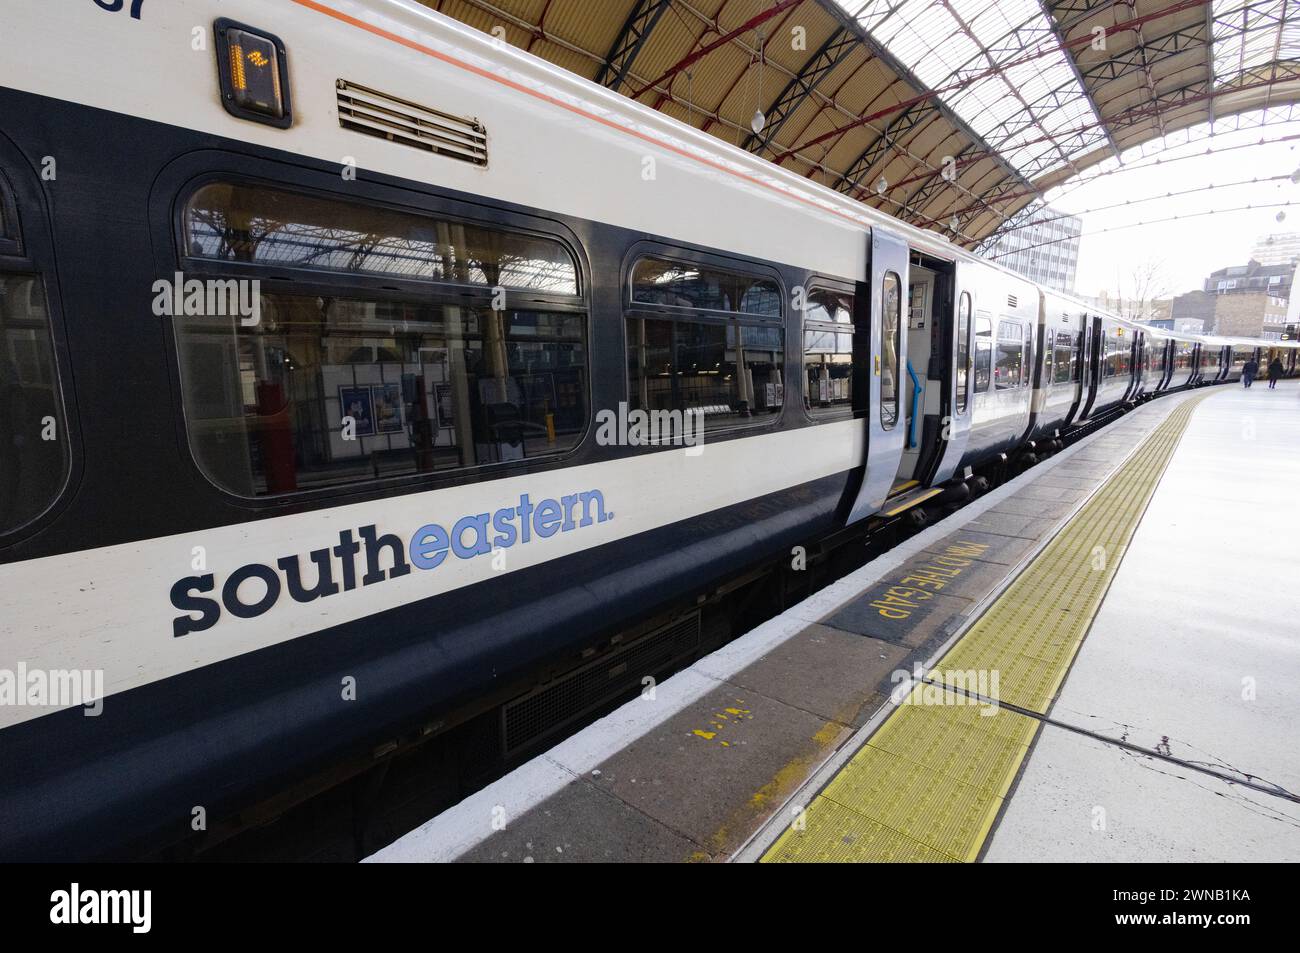 A Southeastern train waiting at the platform, Victoria rail station, London UK Stock Photo